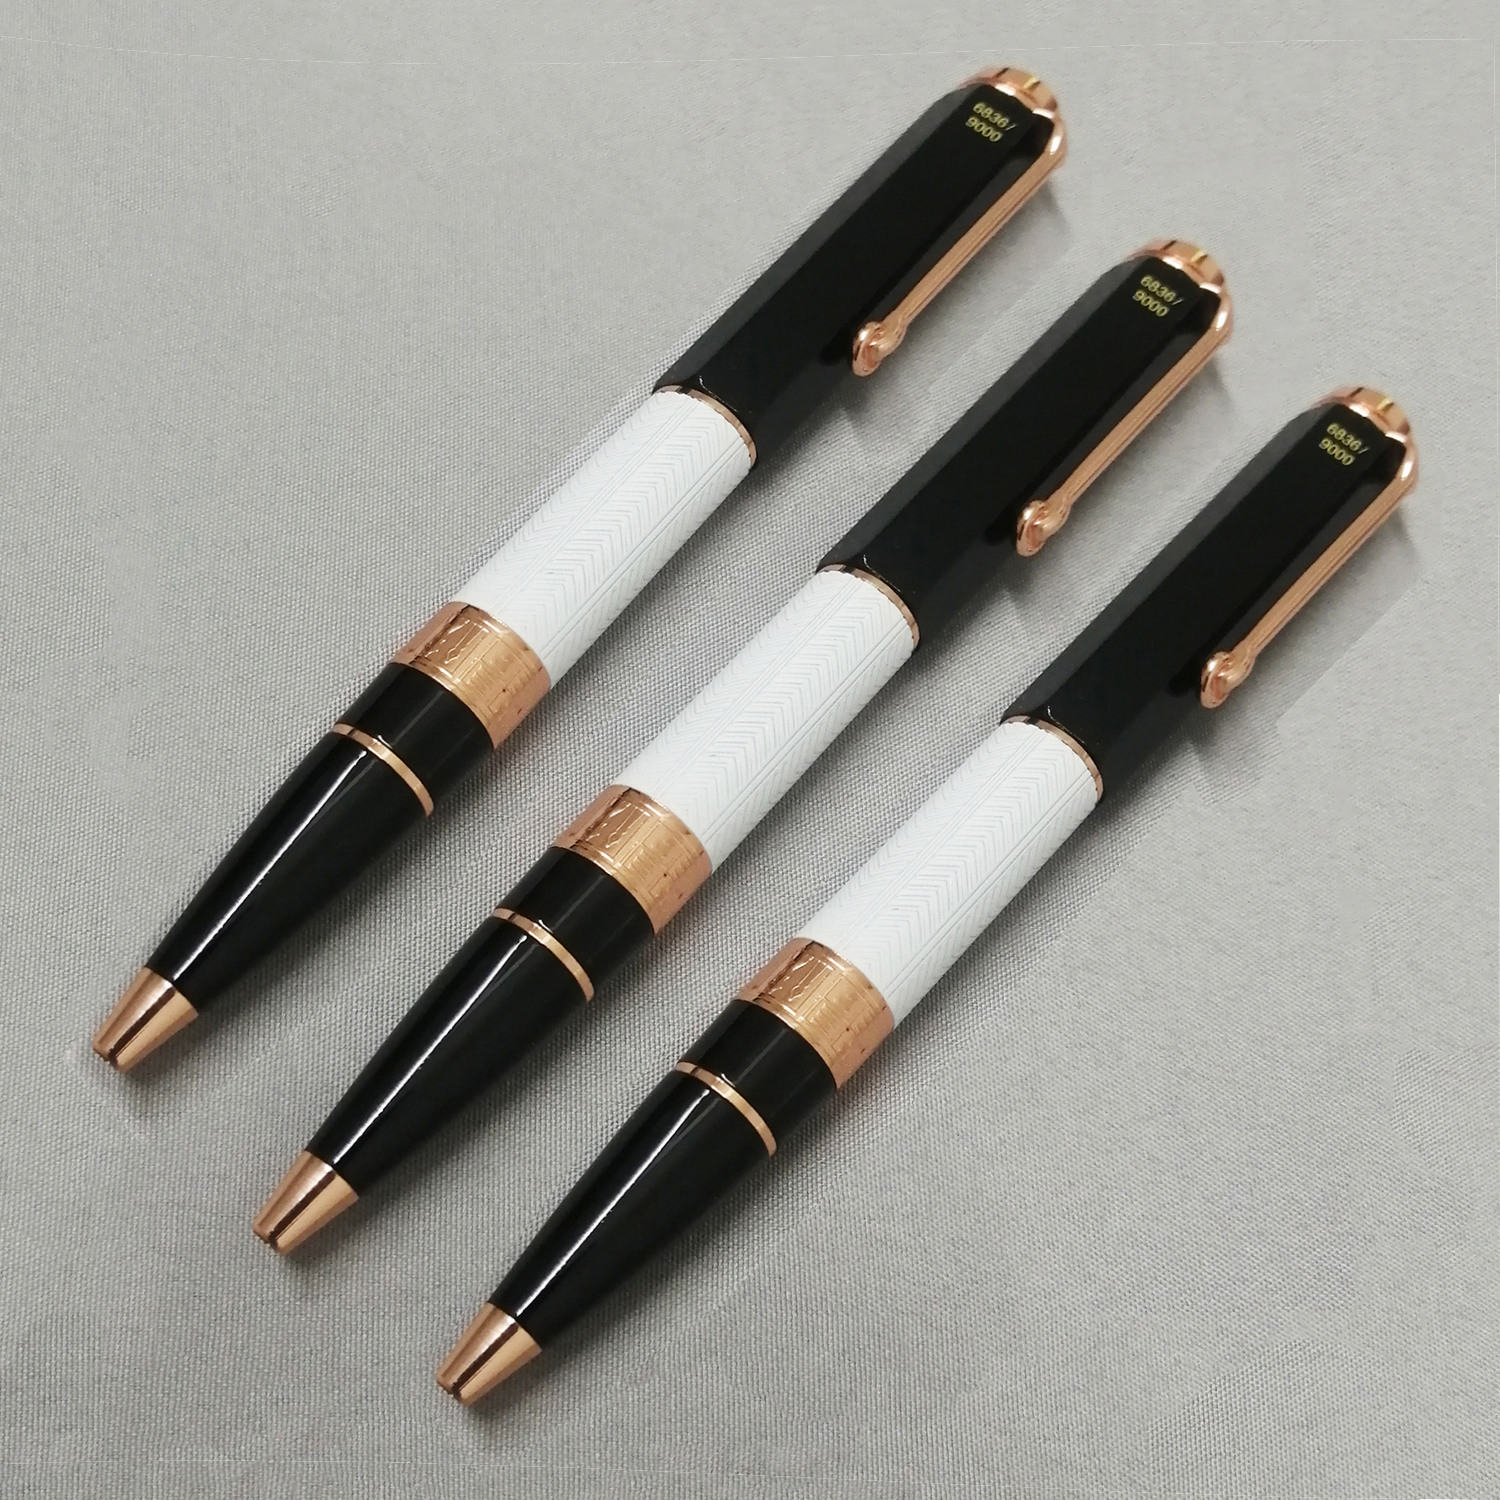 YAMALANG Luxury Signature Ball Point Pen Wholesale Price Black Smooth Metal Penholder Business School Writing Supplies от DHgate WW